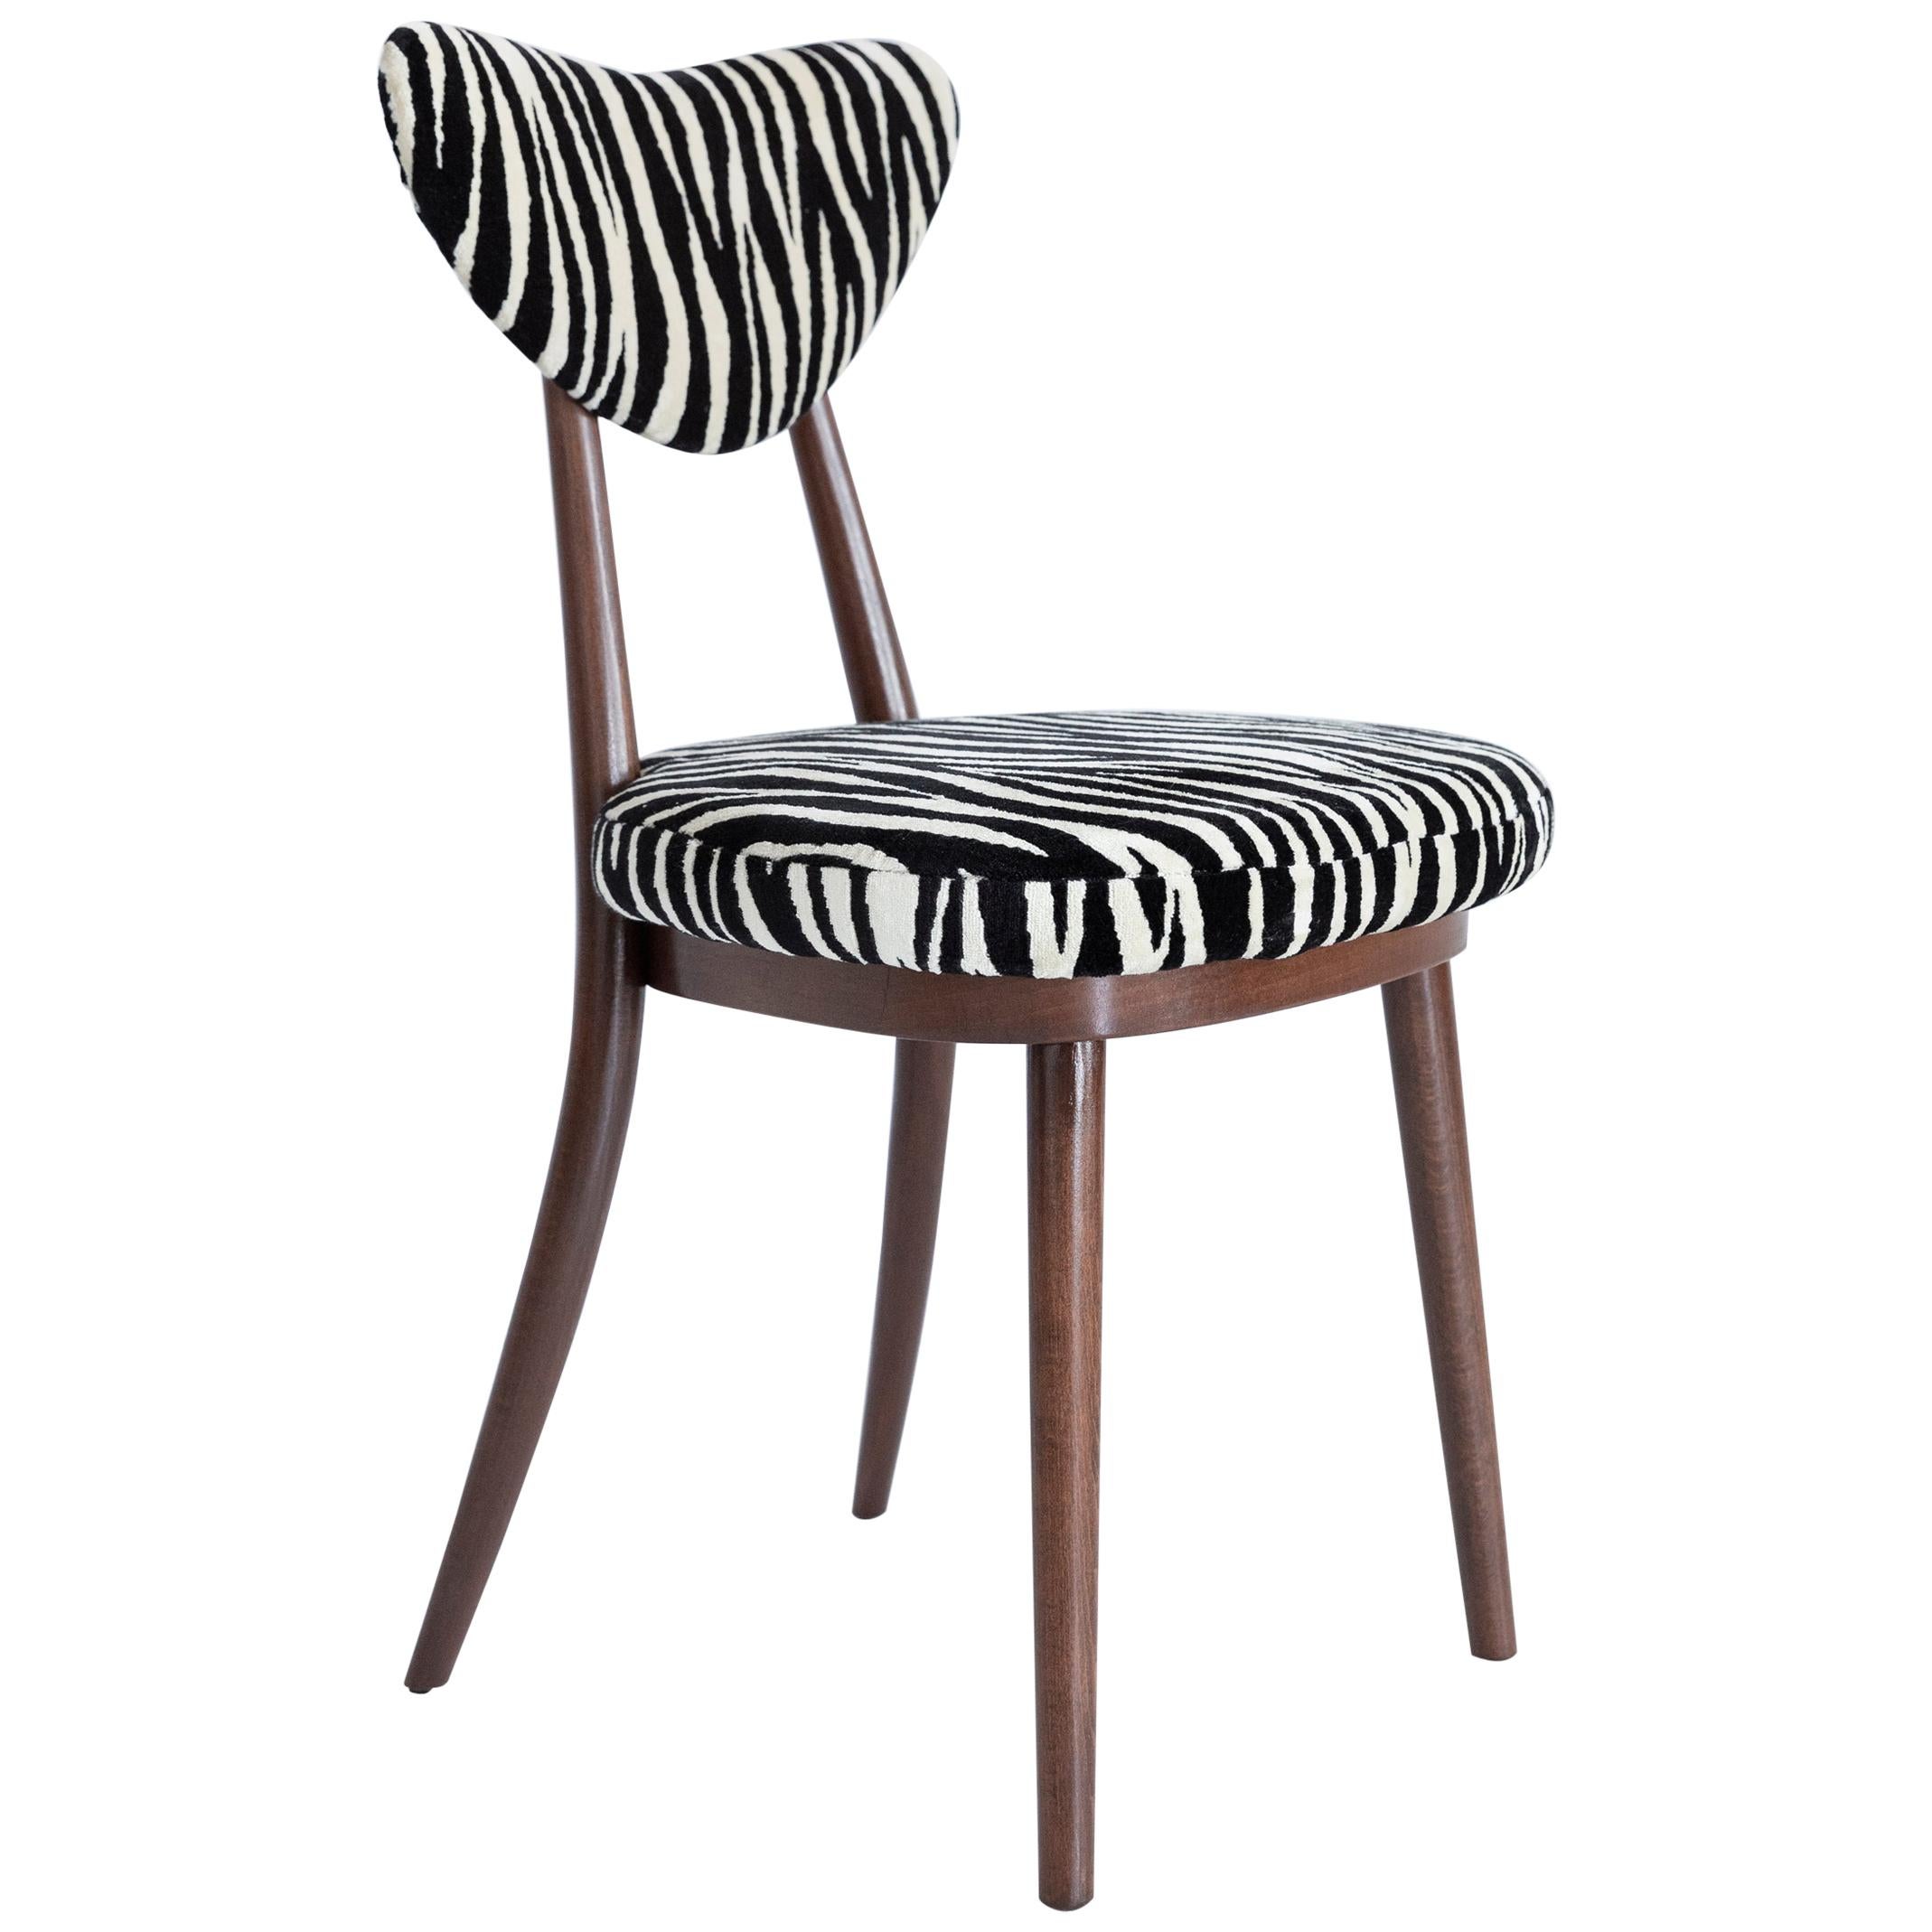 Midcentury Regency Zebra Black and White Heart Chair, Poland, 1960s For Sale